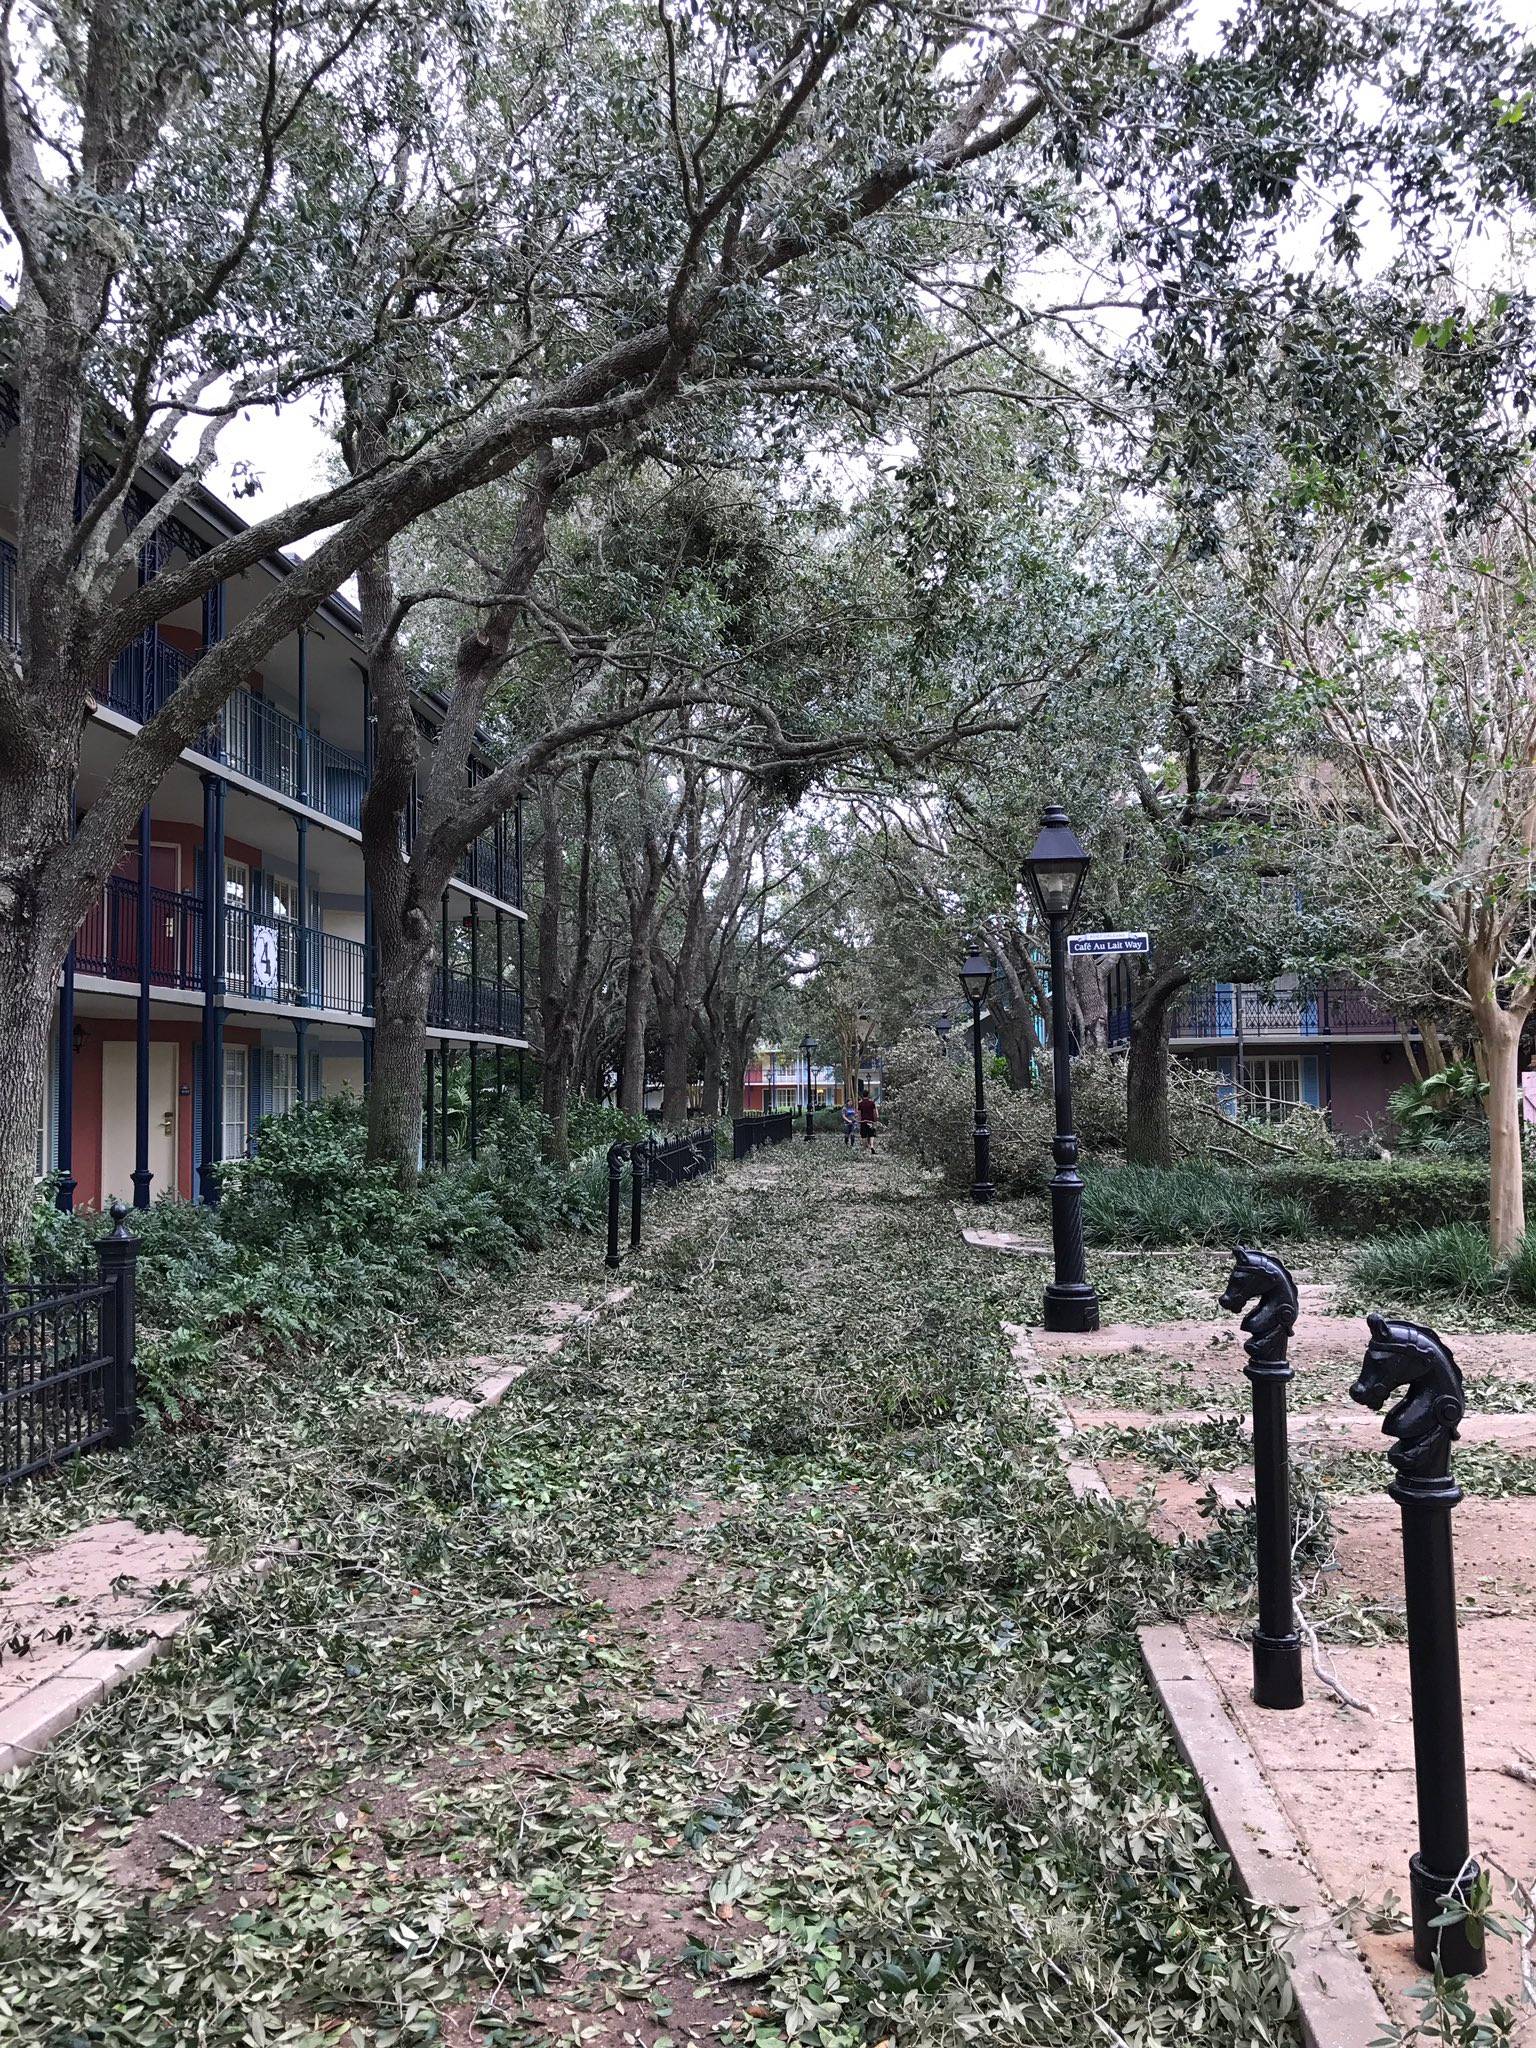 Hurricane Irma damage at Disney's Port Orleans Resort. Photo by @CafeFantasia